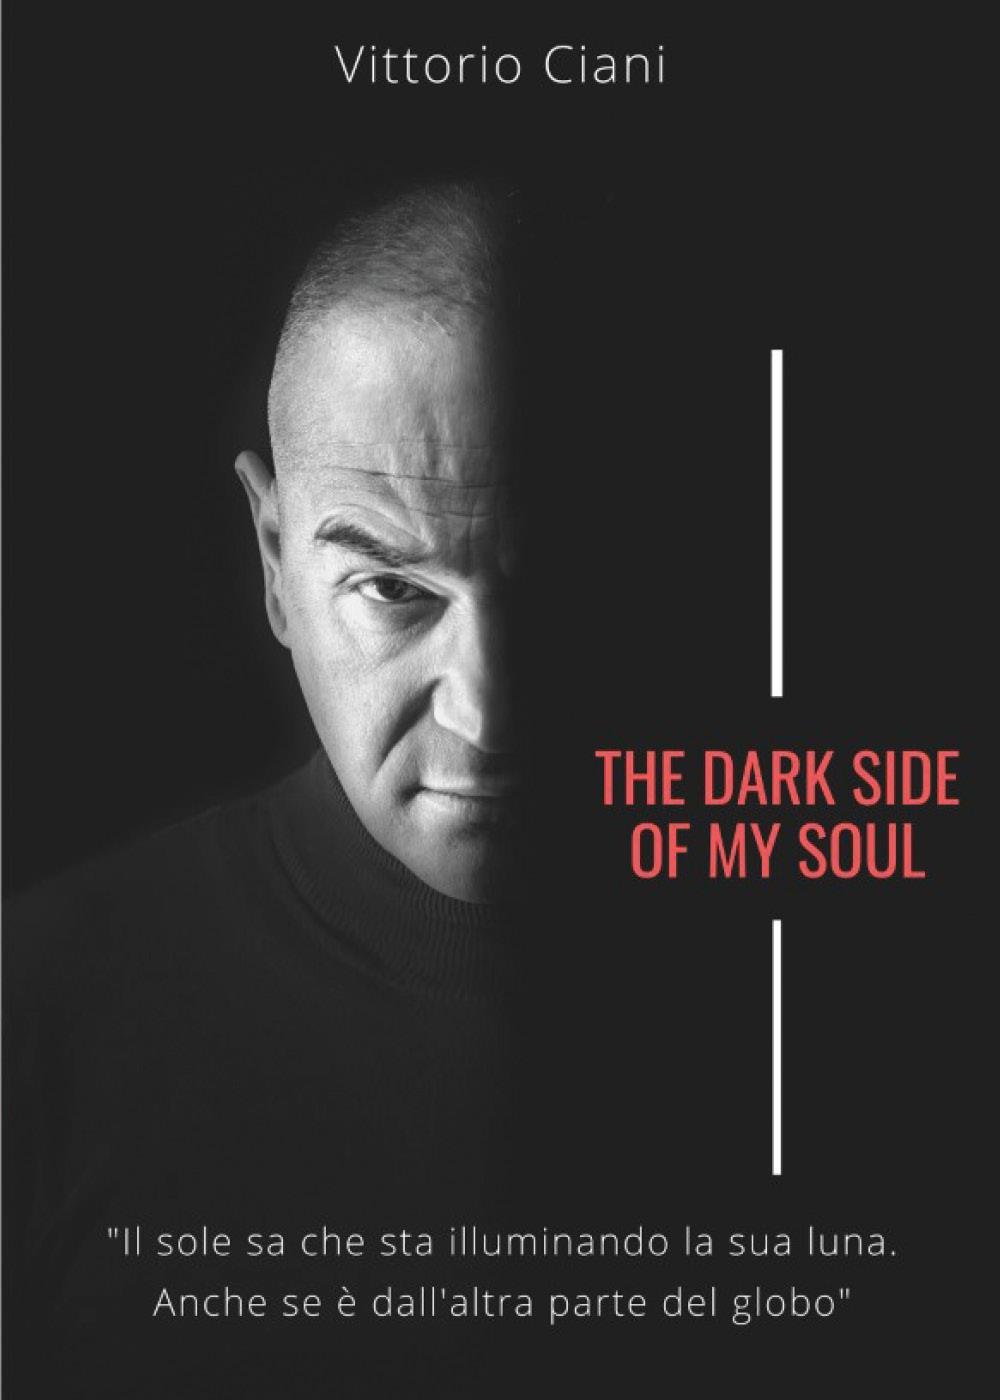 The Dark Side of my Soul